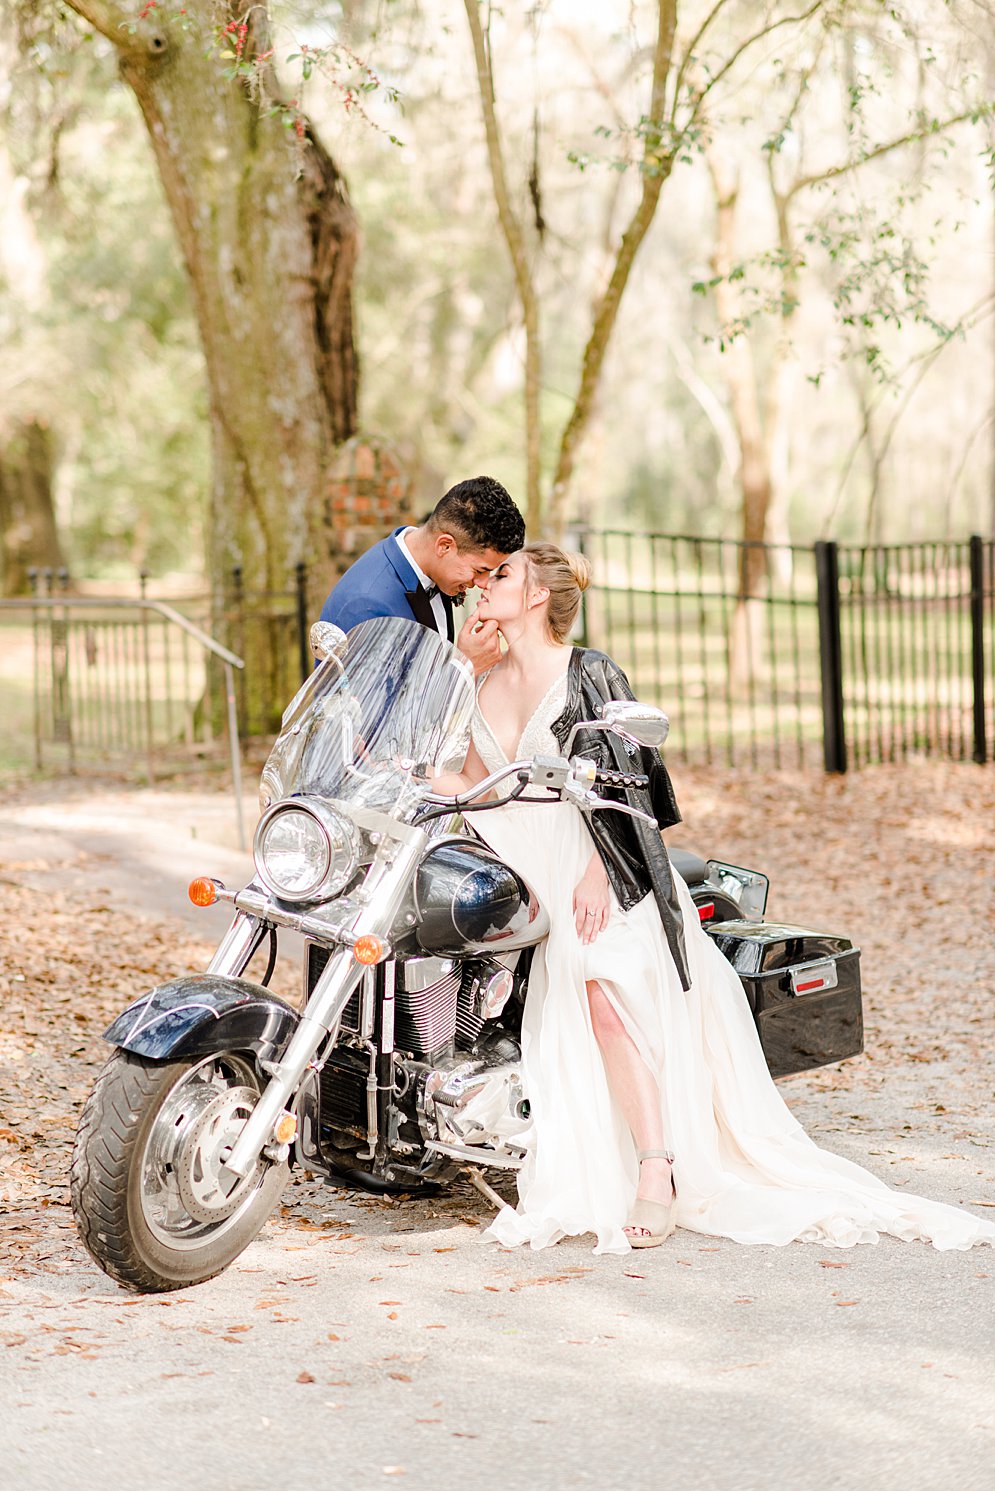 old sheldon church ruins motorcycle elopement Charleston SC wedding photographer_5995.jpg